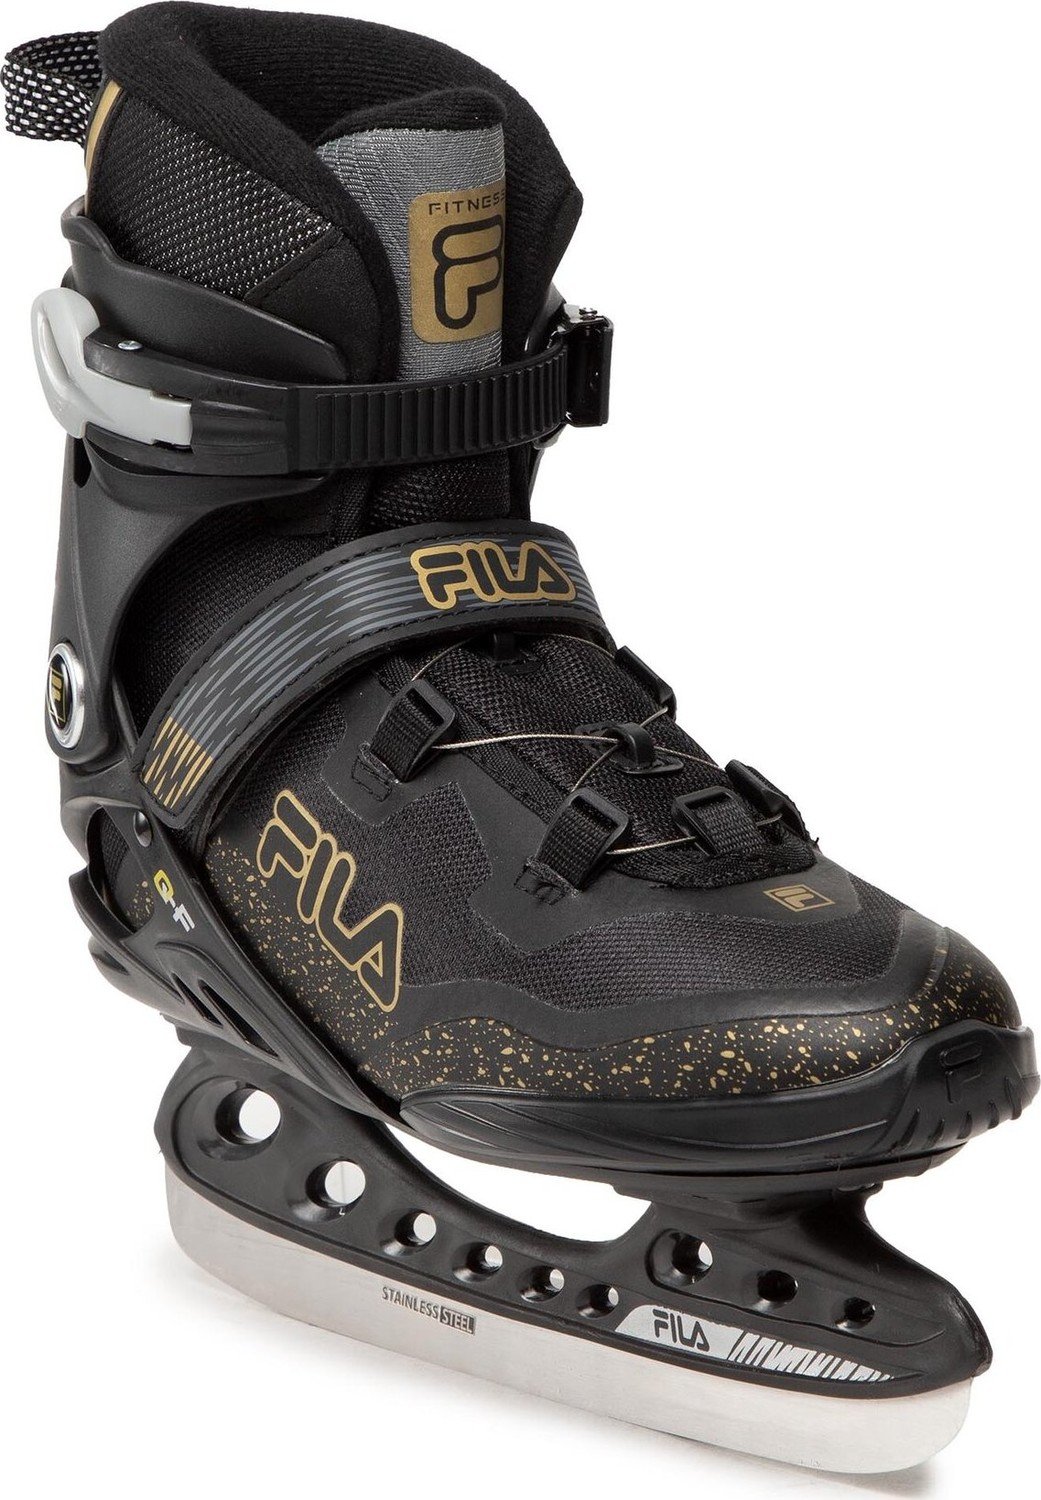 Brusle Fila Skates Primo Qf 010421010 Black/Gold